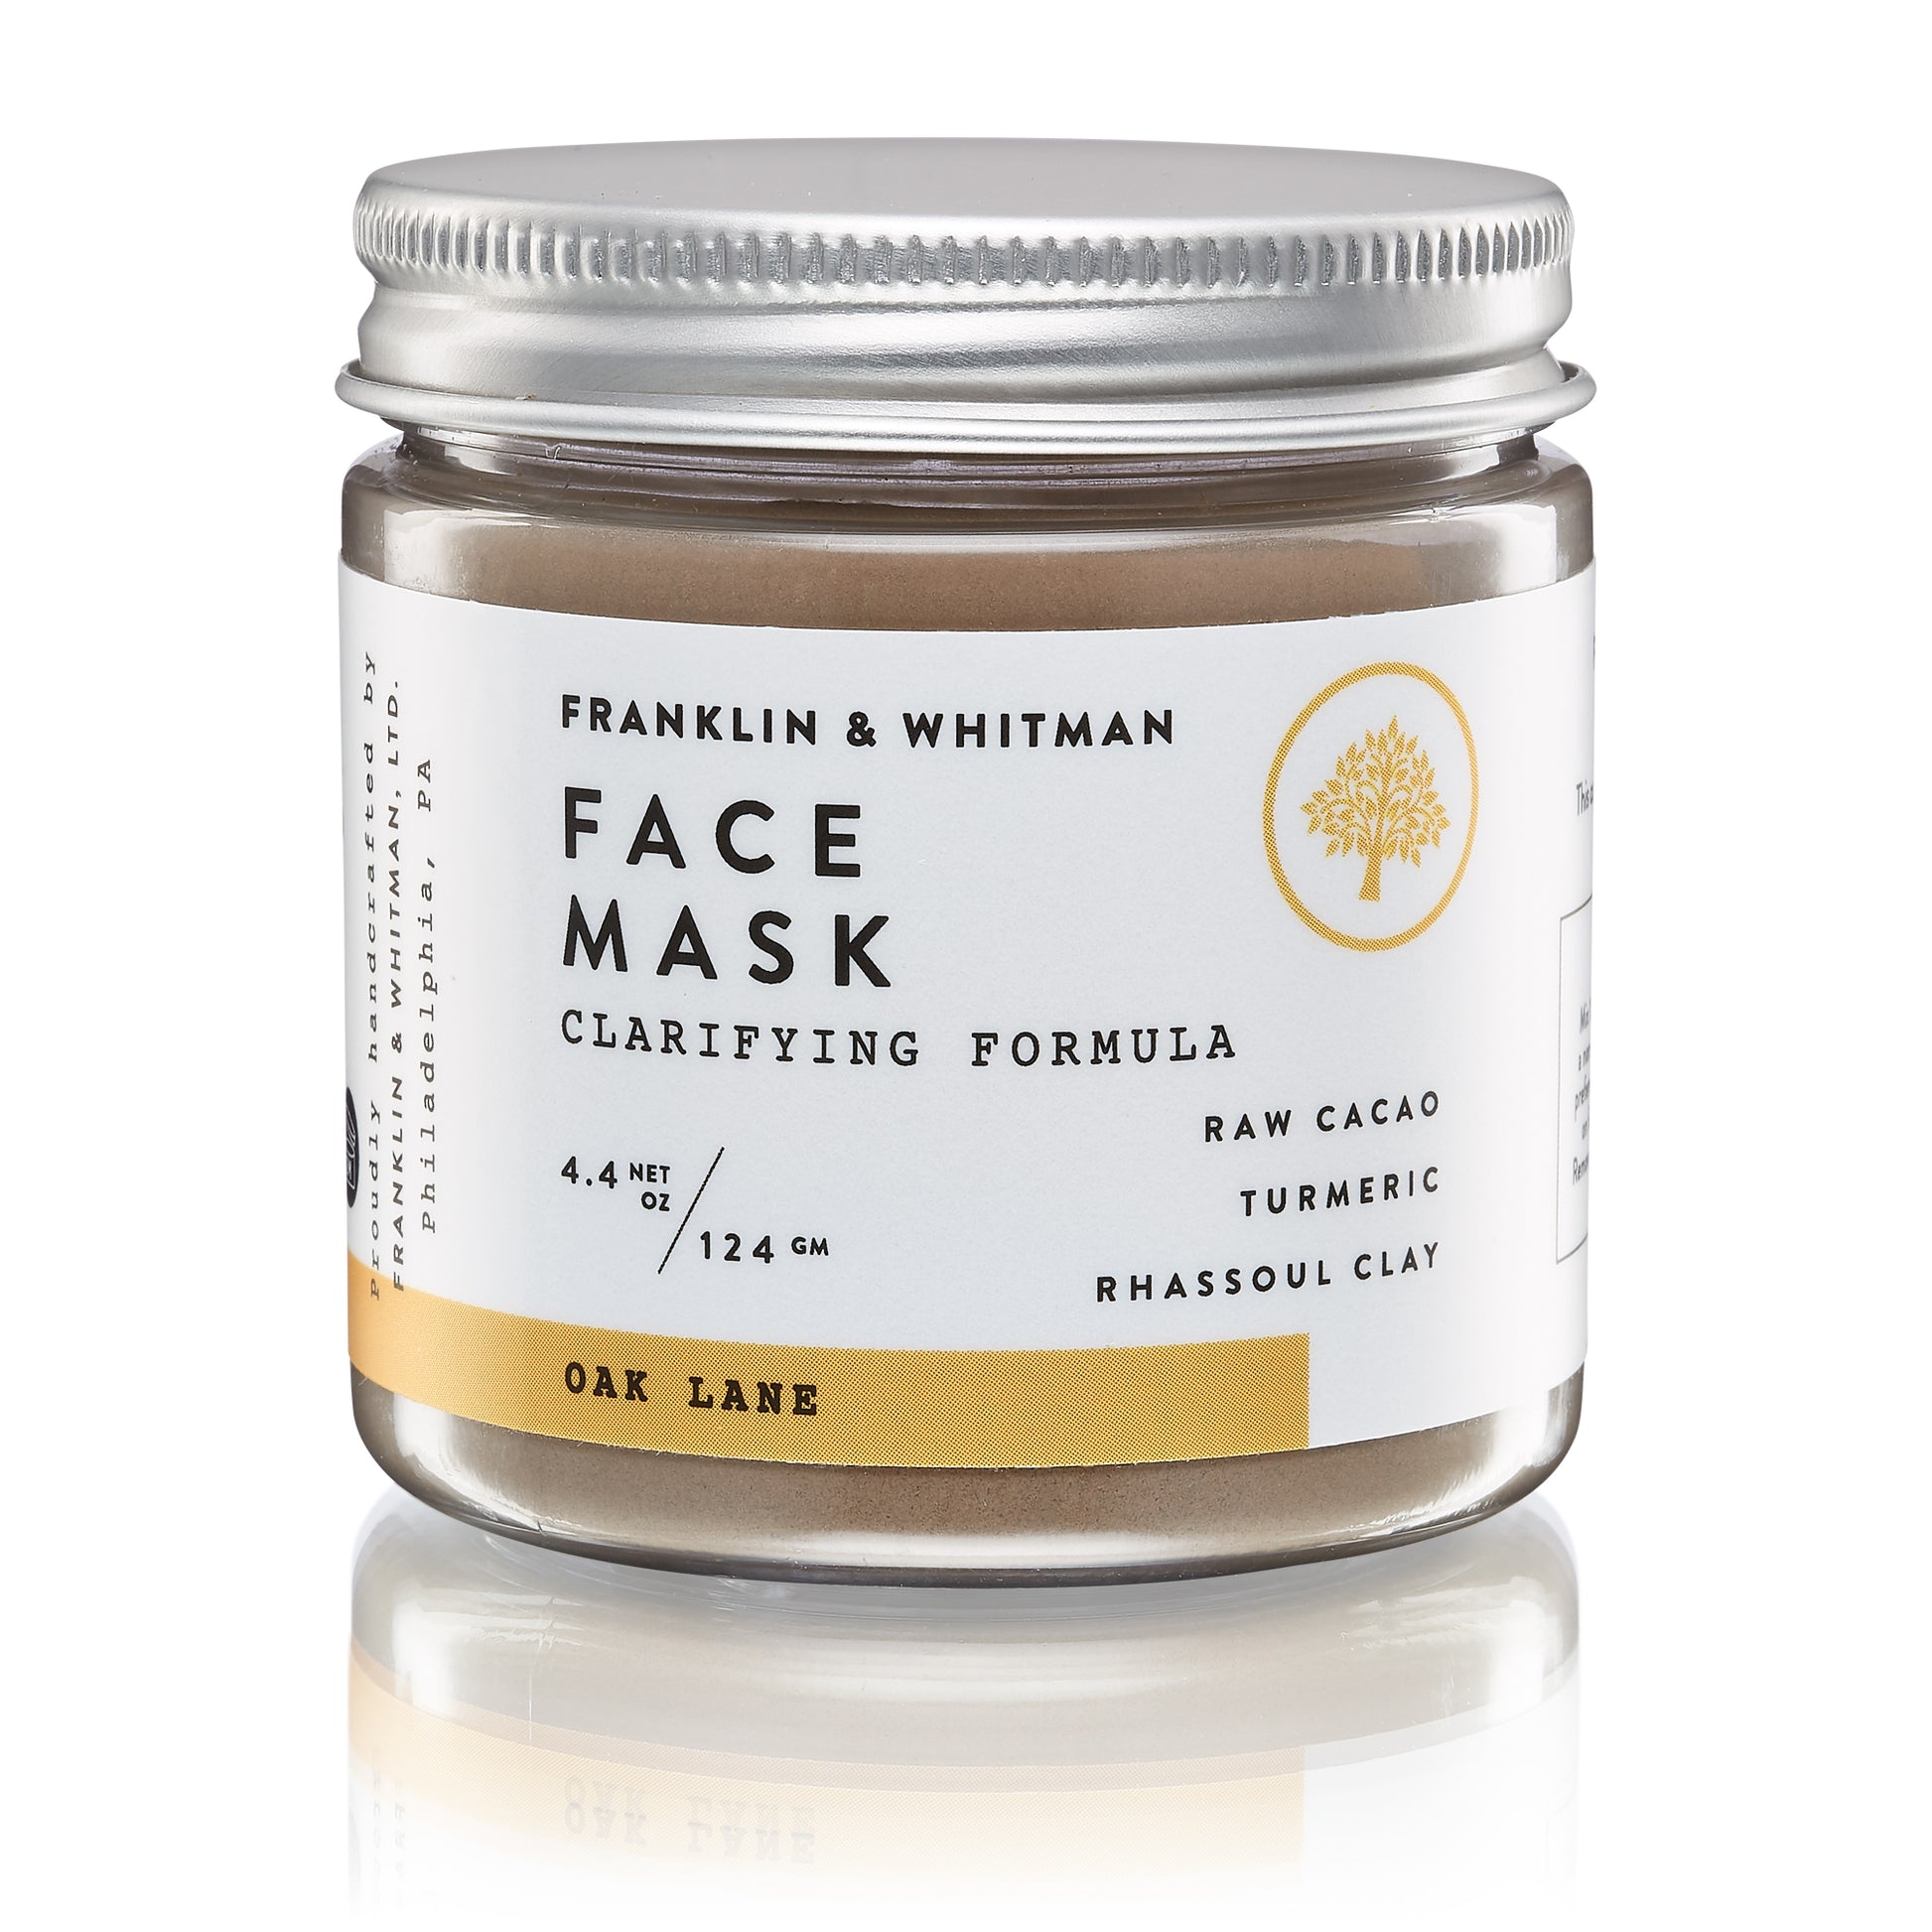 Vegan, plant based, cruelty free Oak Lane Face Mask jar for skin care